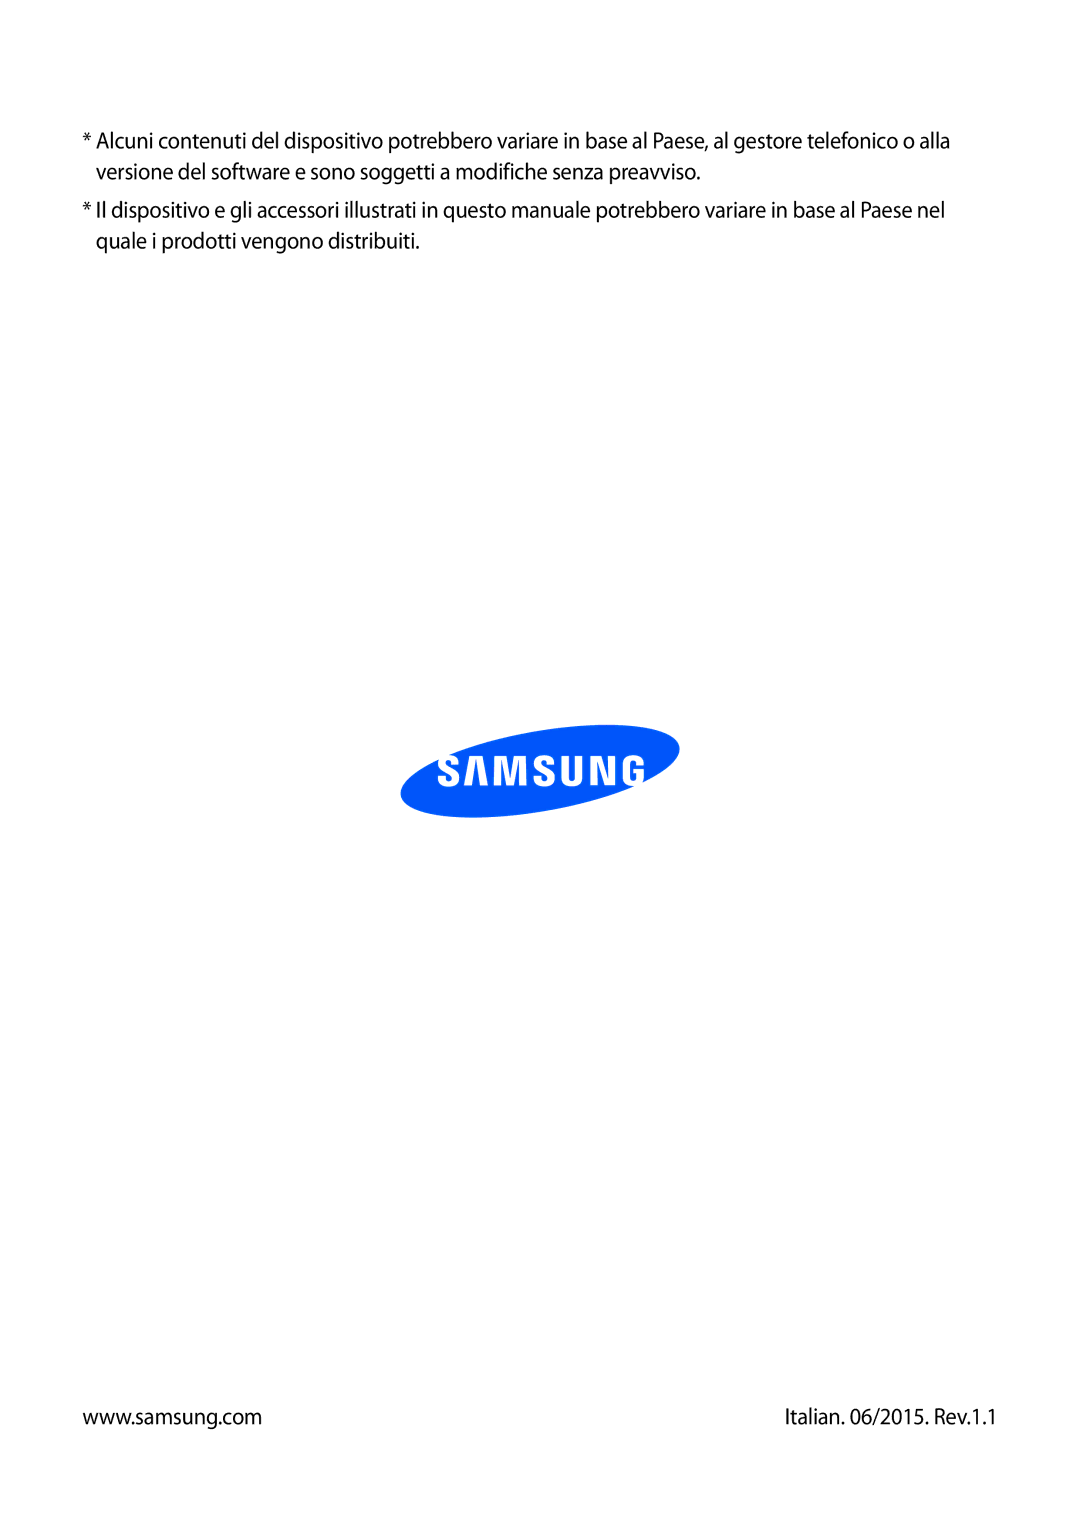 Samsung SM-T325NZWAXEO, SM-T325NZWADBT, SM-T325NZWAITV manual Italian /2015. Rev.1.1 